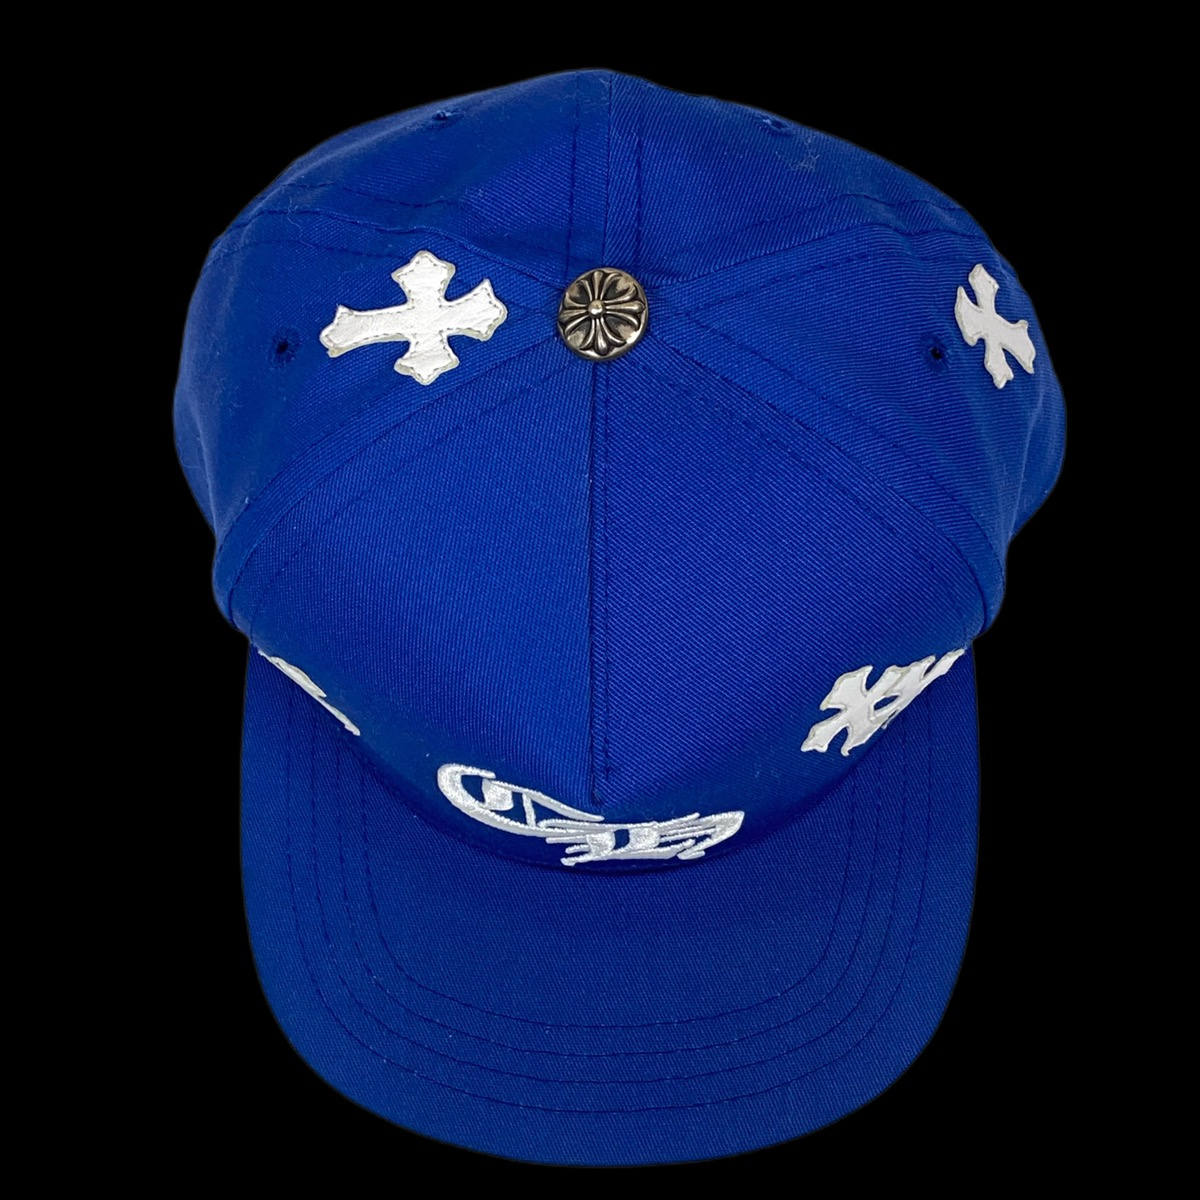 Buy Chrome Hearts Cross Patch Baseball Hat 'Blue' - 1383 100000701CPBH BLUE